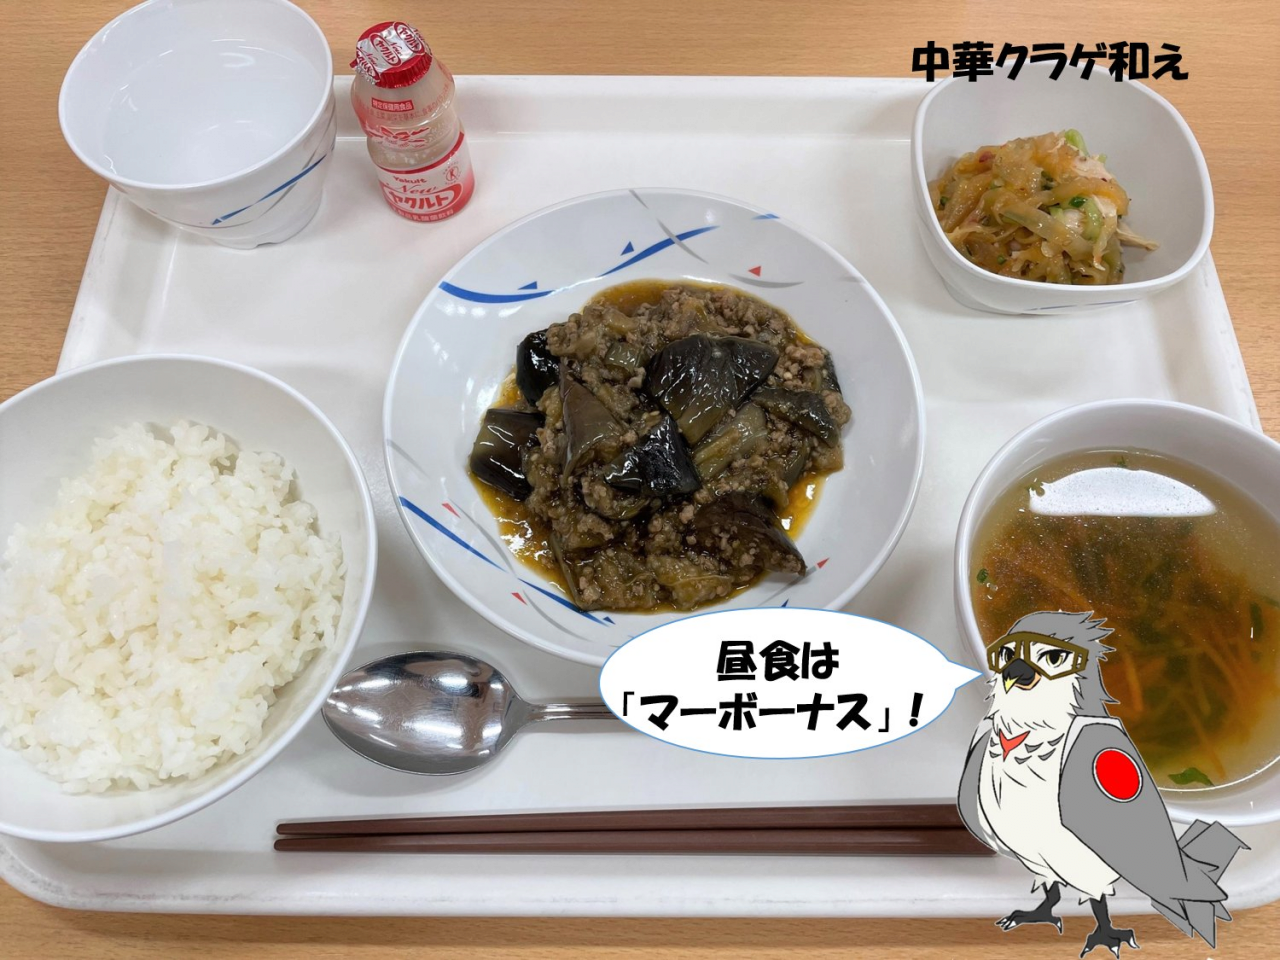 Japanese Self-Defense Force's balanced meal.